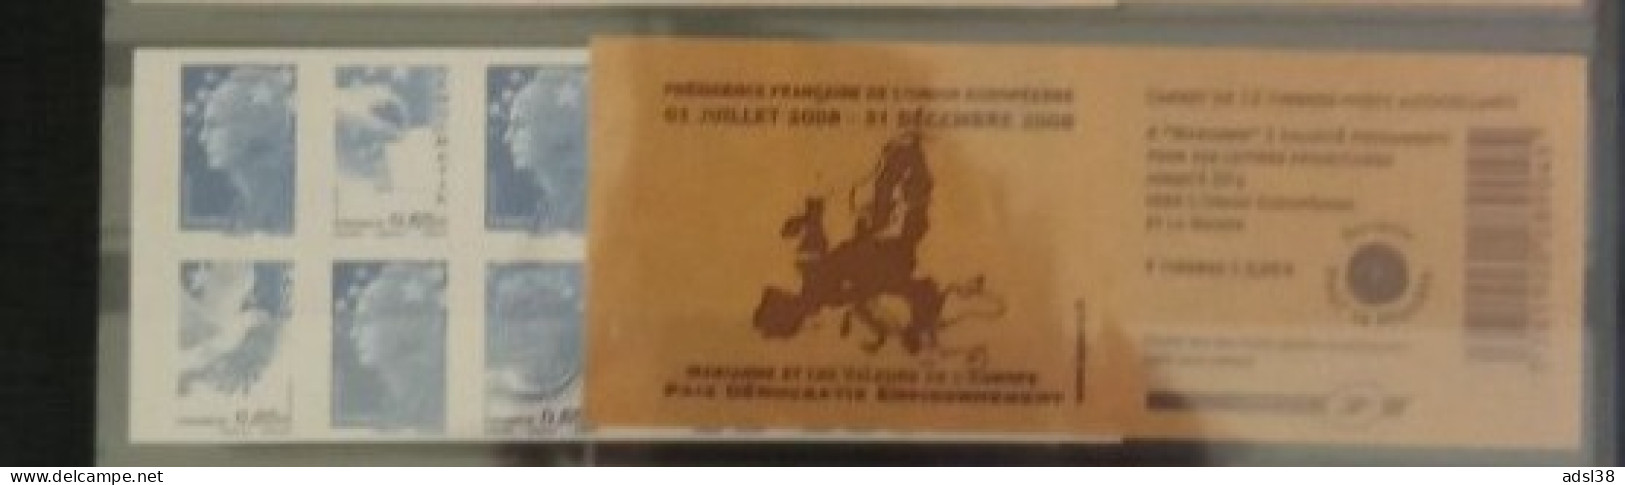 France - Présidence Française - 1517 - Commemoratives